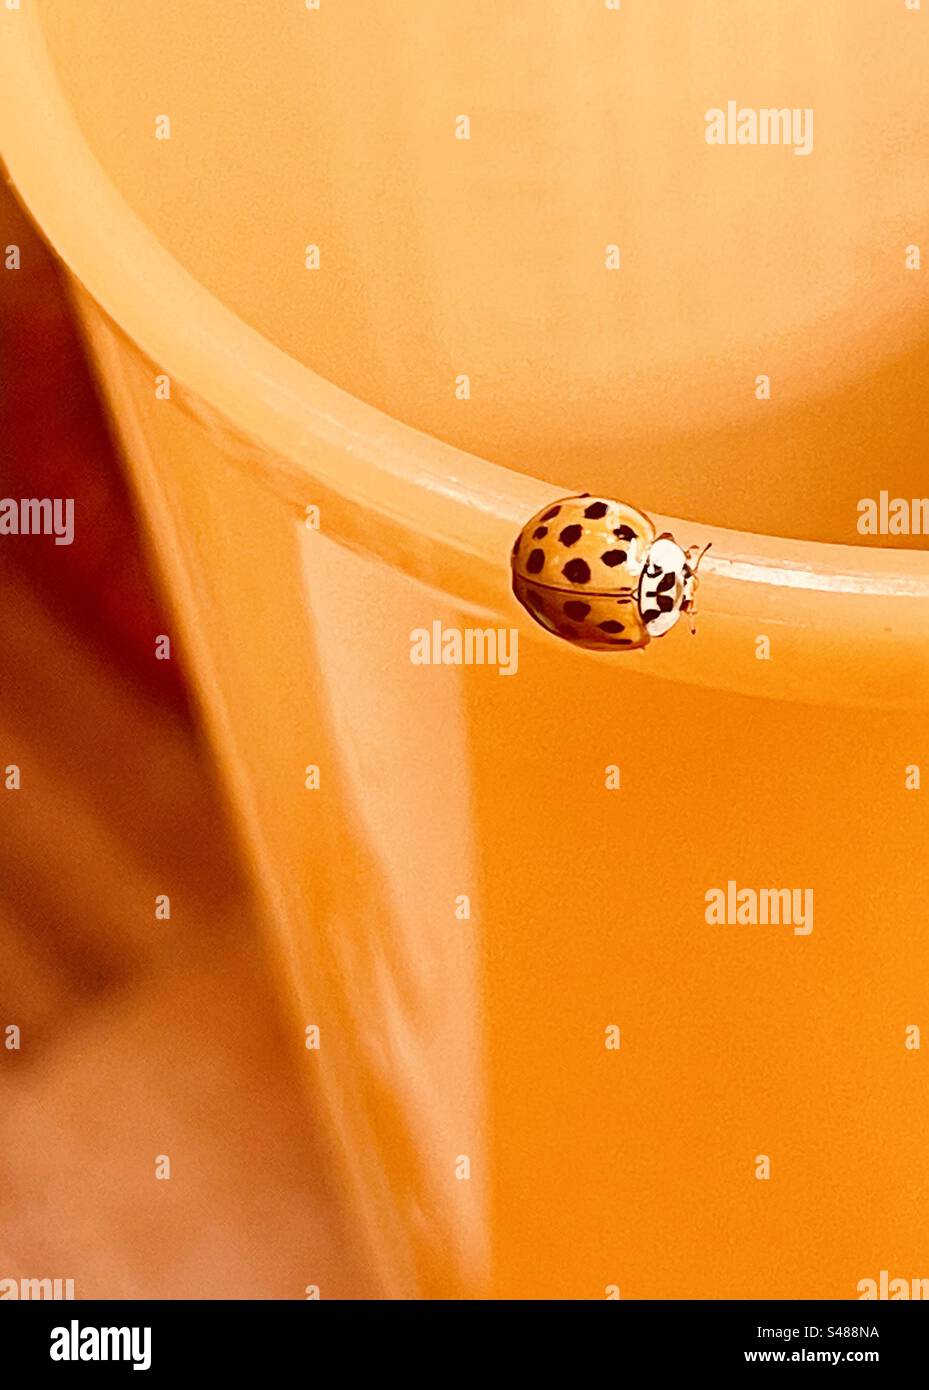 Asian Lady Beetle on rim or orange plastic cup Stock Photo